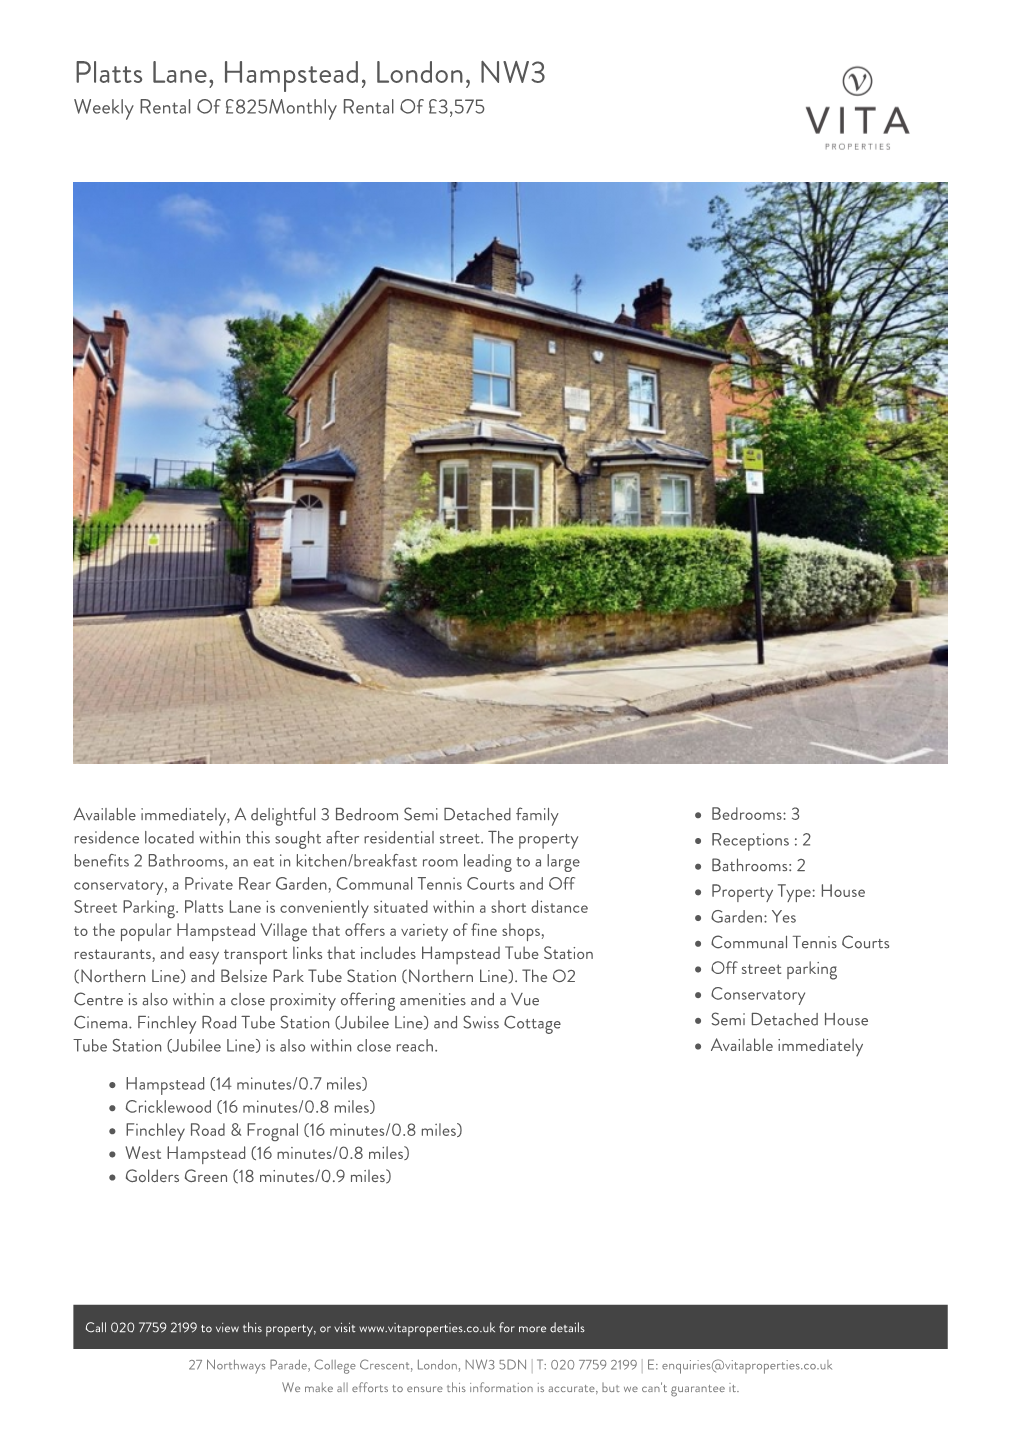 Platts Lane, Hampstead, London, NW3 Weekly Rental of £825Monthly Rental of £3,575